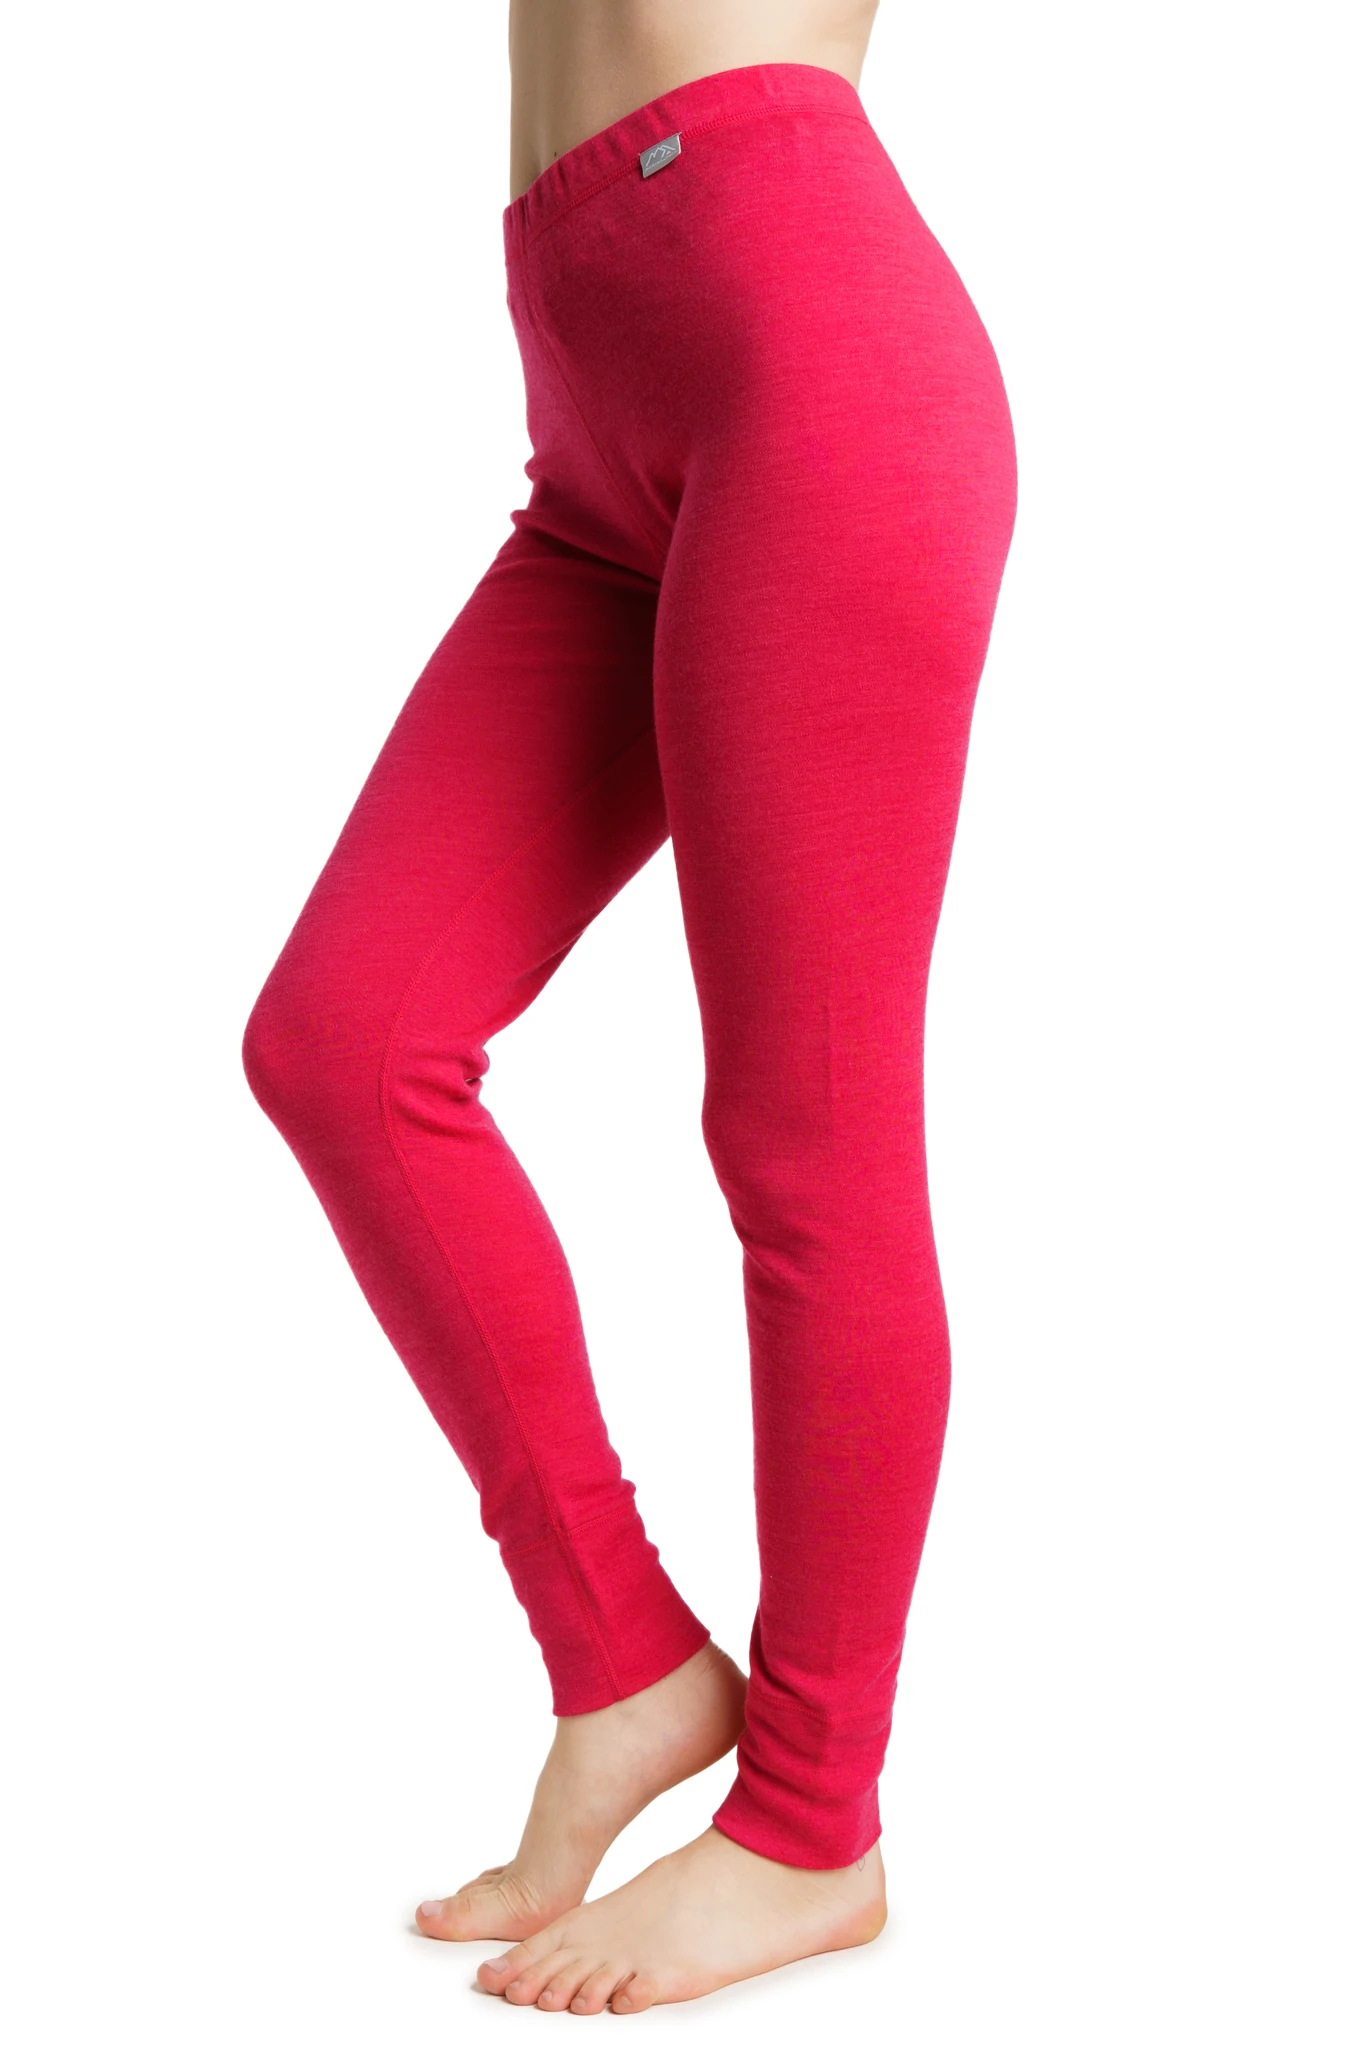 Magenta 250 Merino Wool Base Layer Womens Pants 100% Merino Wool Leggings Midweight Thermal Underwear Bottoms + Wool Socks